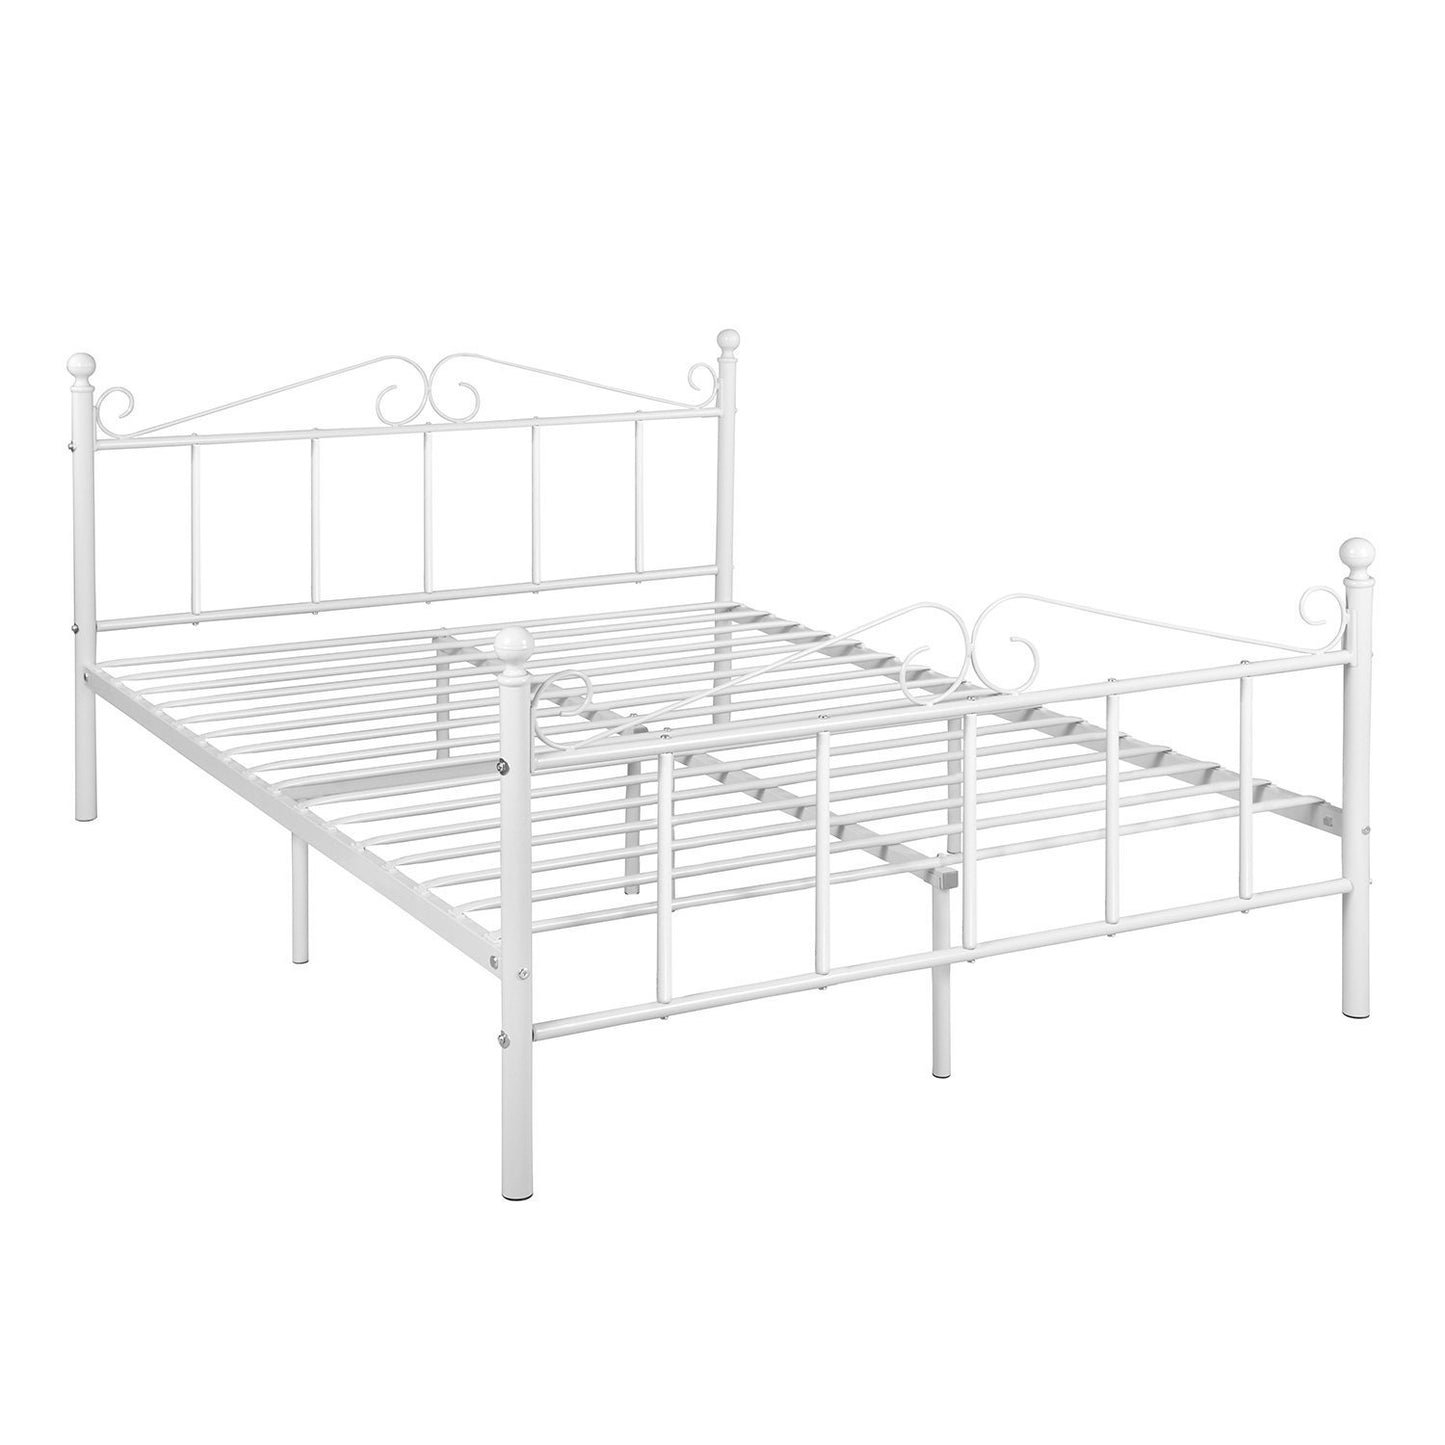 TIKI Single/Double Metal Bed 94 * 196 cm/143 * 196 cm - Black/White